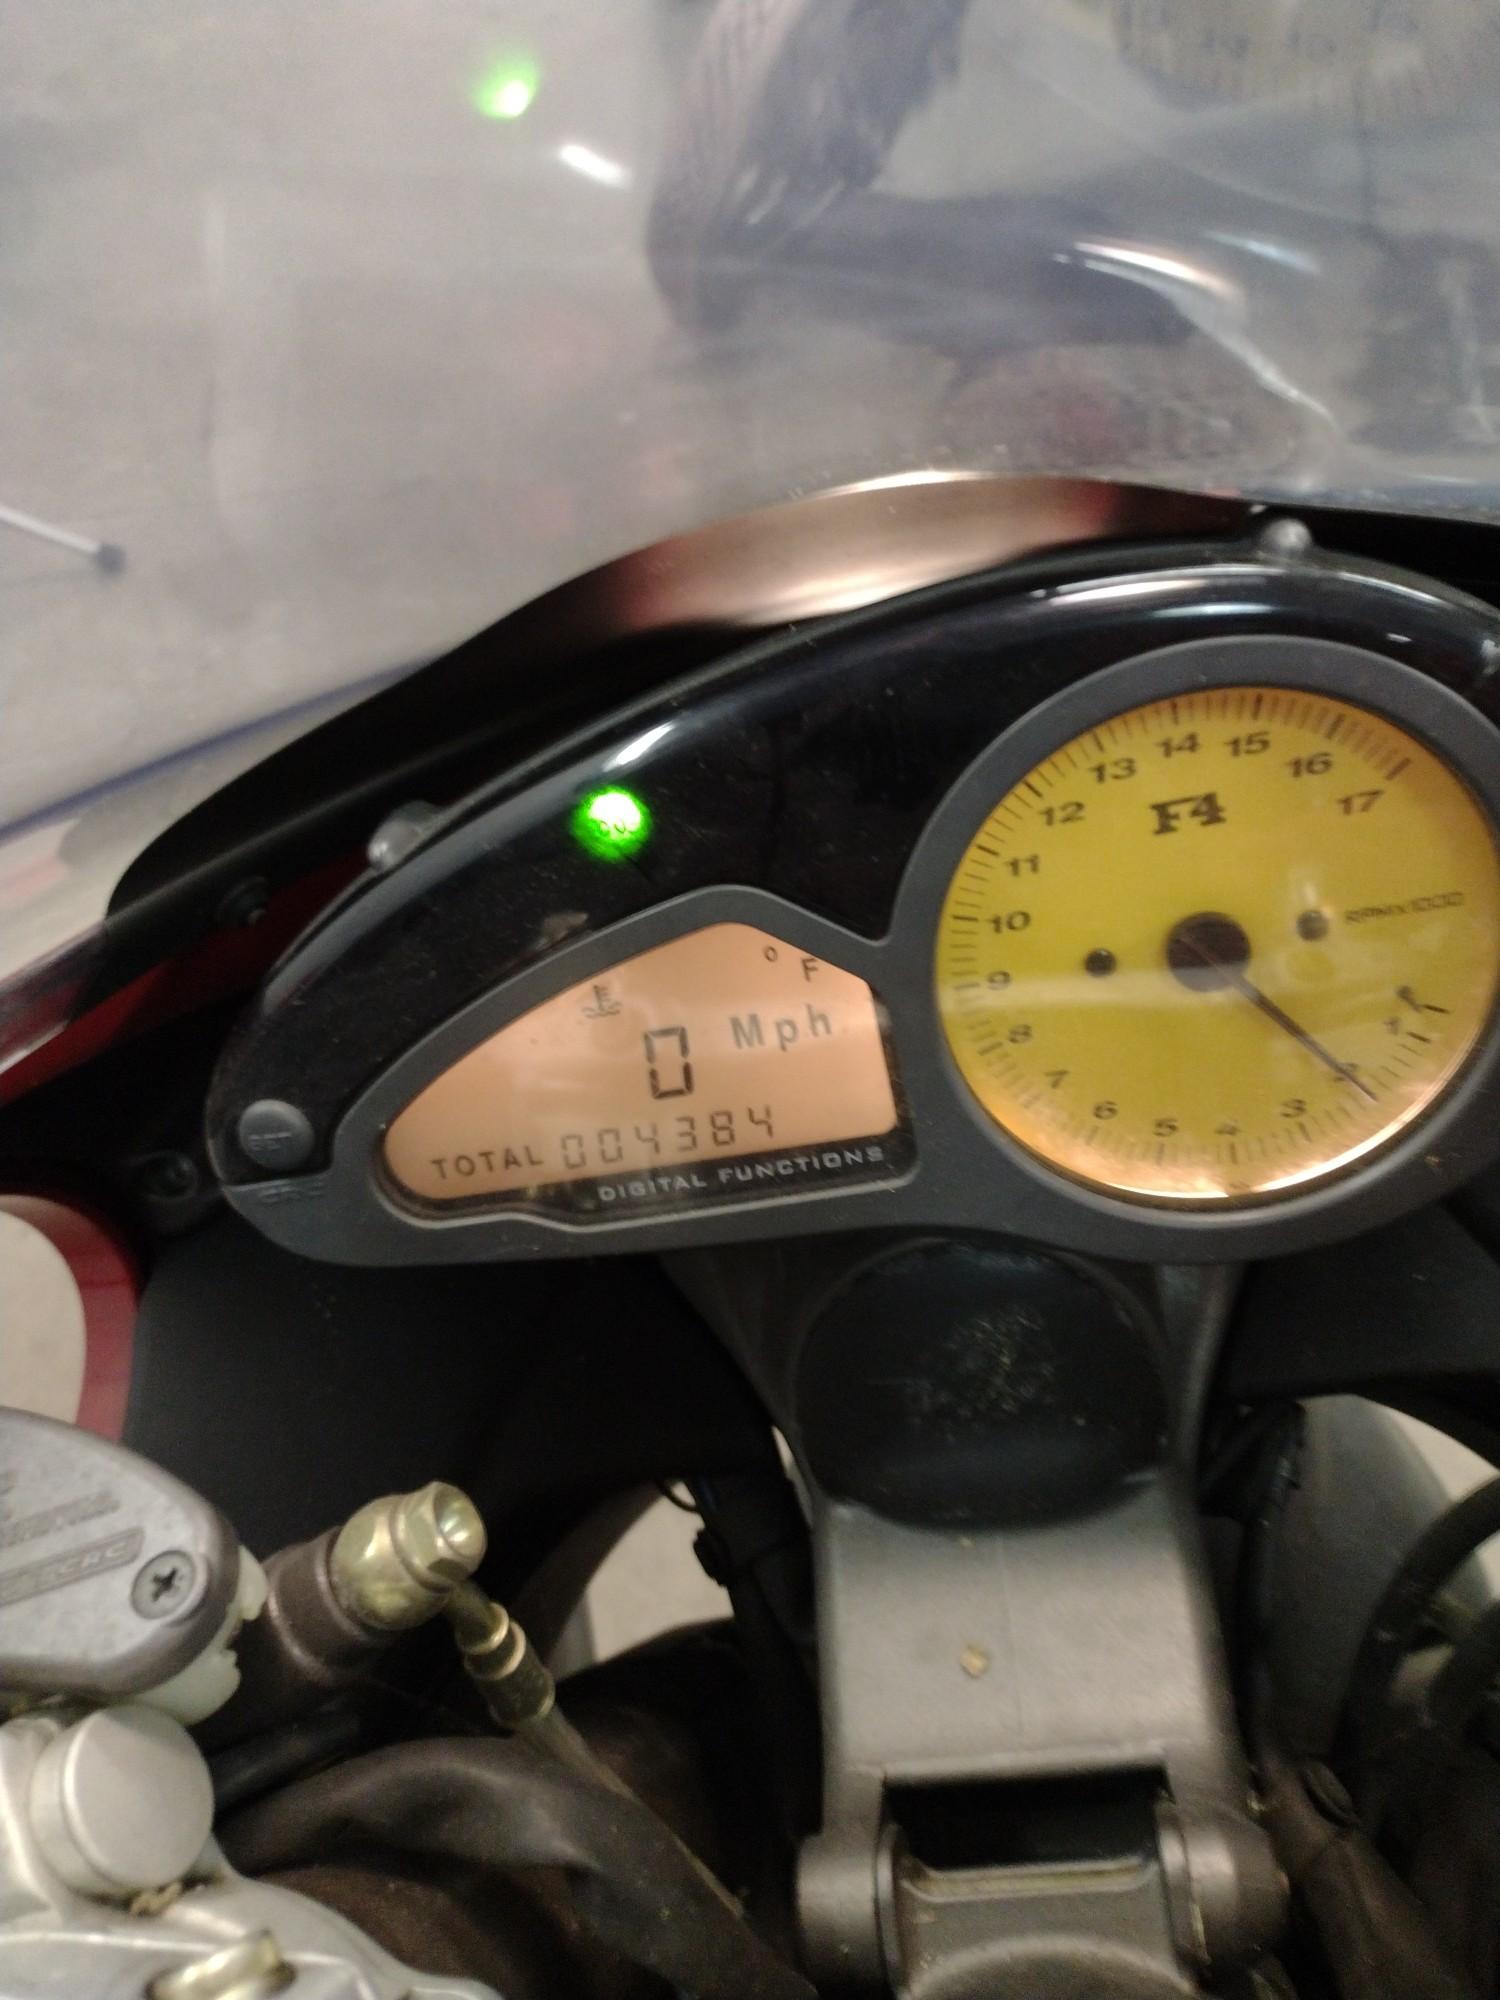 Motorcycle 2000 MV AGUSTA F4